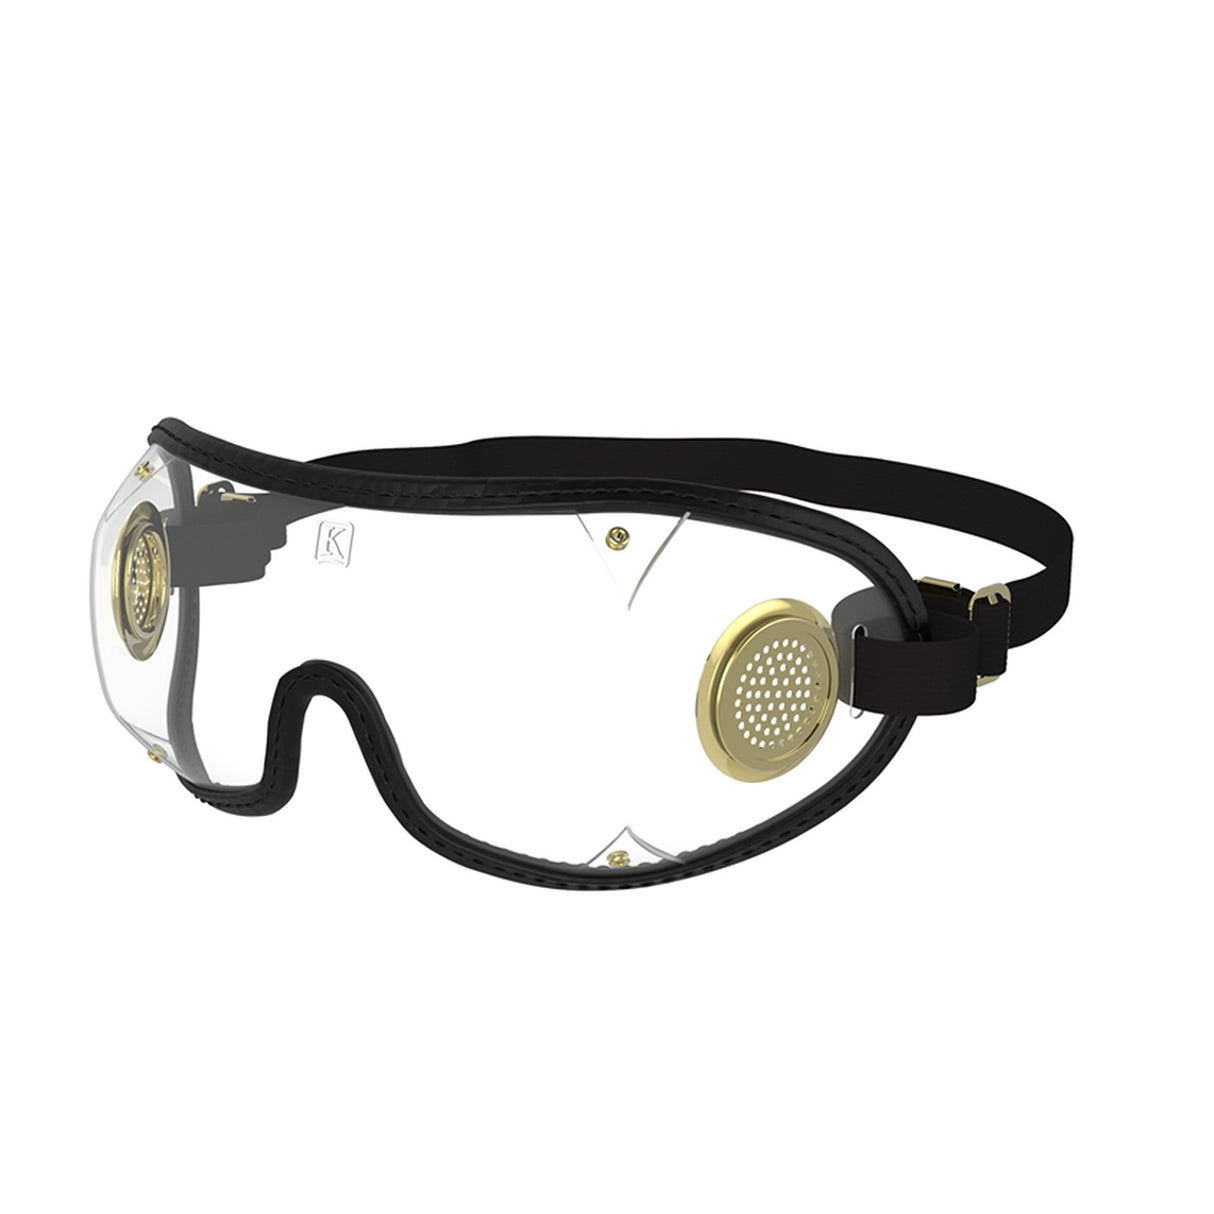 Race Goggles Clear W/ Trim